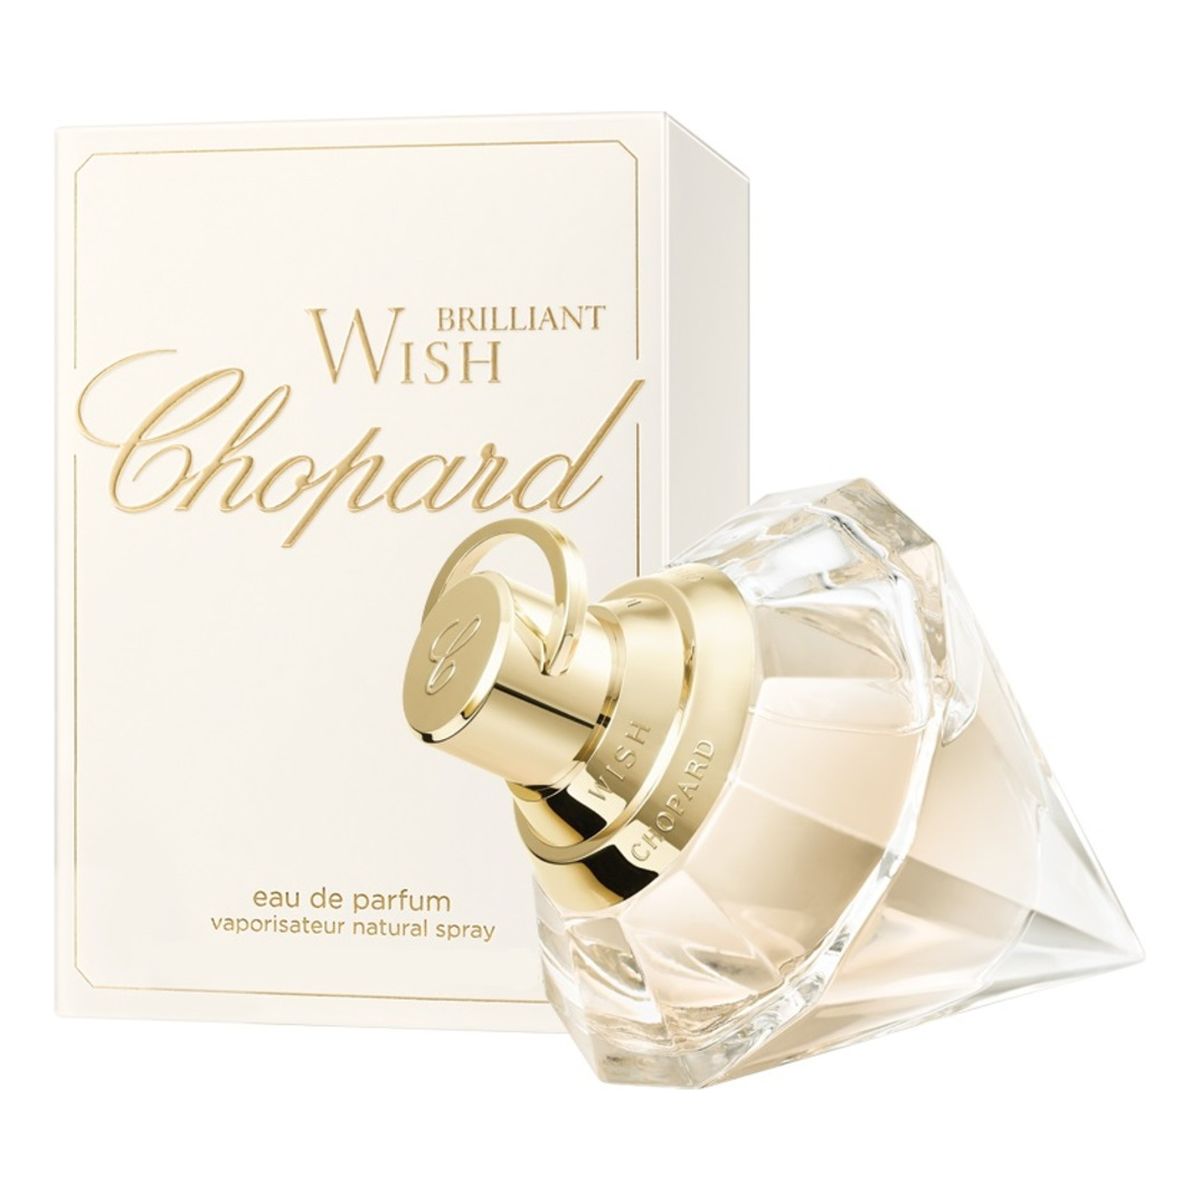 Chopard Brilliant Wish woda perfumowana 75ml